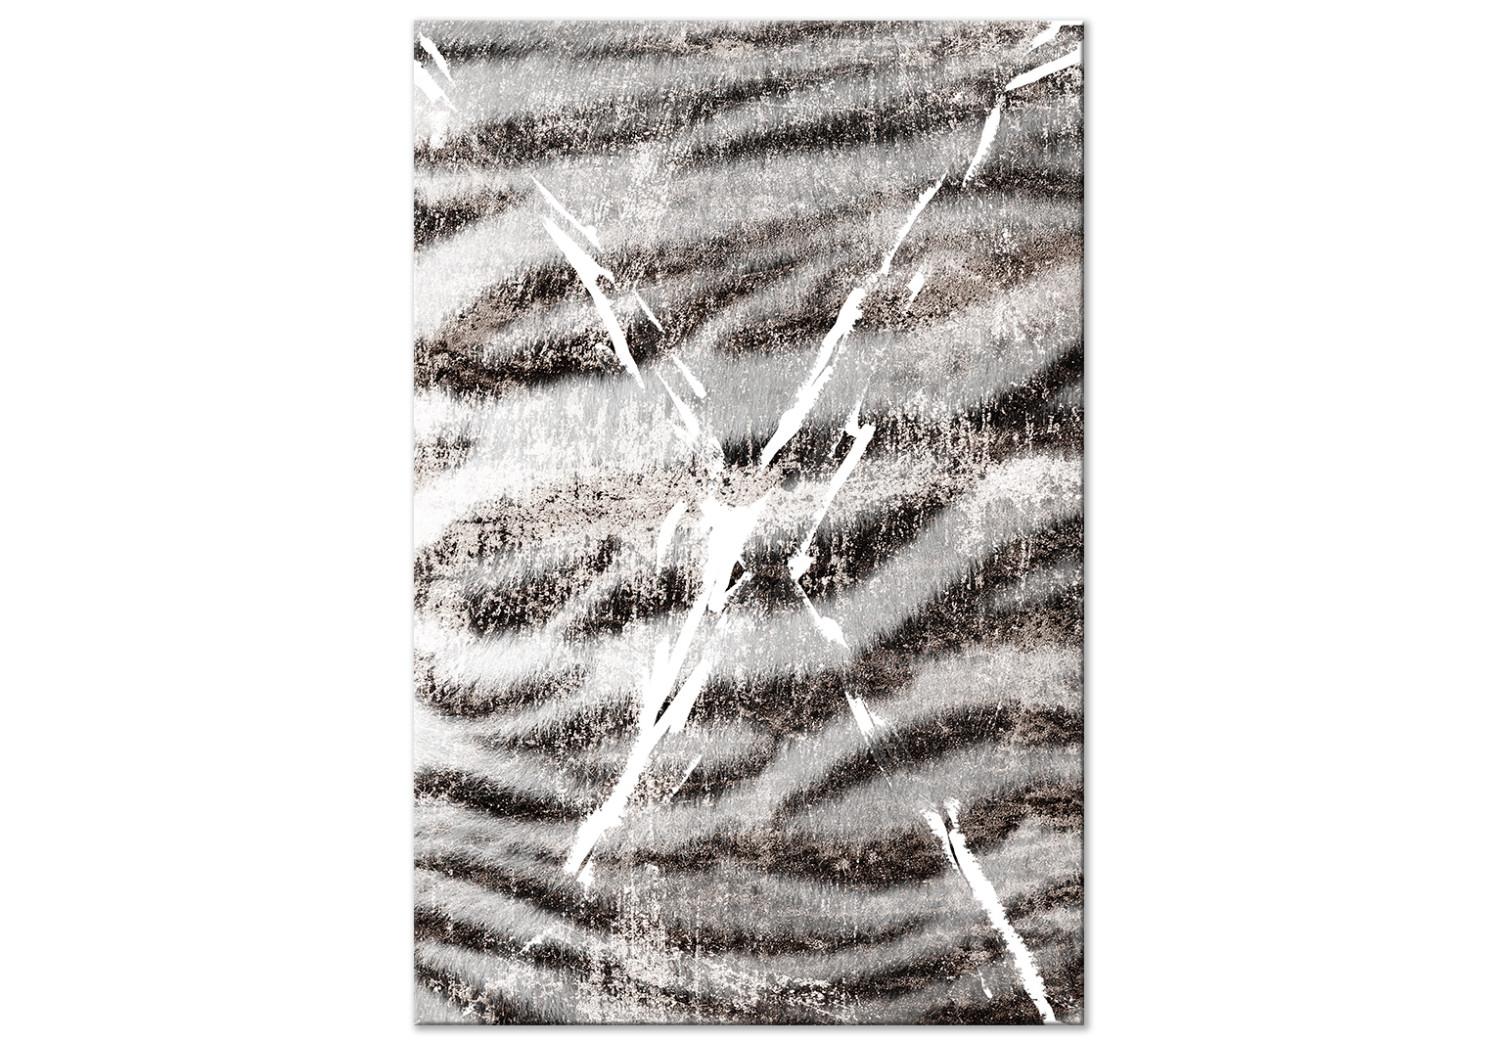 Cuadro moderno Pelo de tigre - detalle de textura animal en tonos grises y blancos